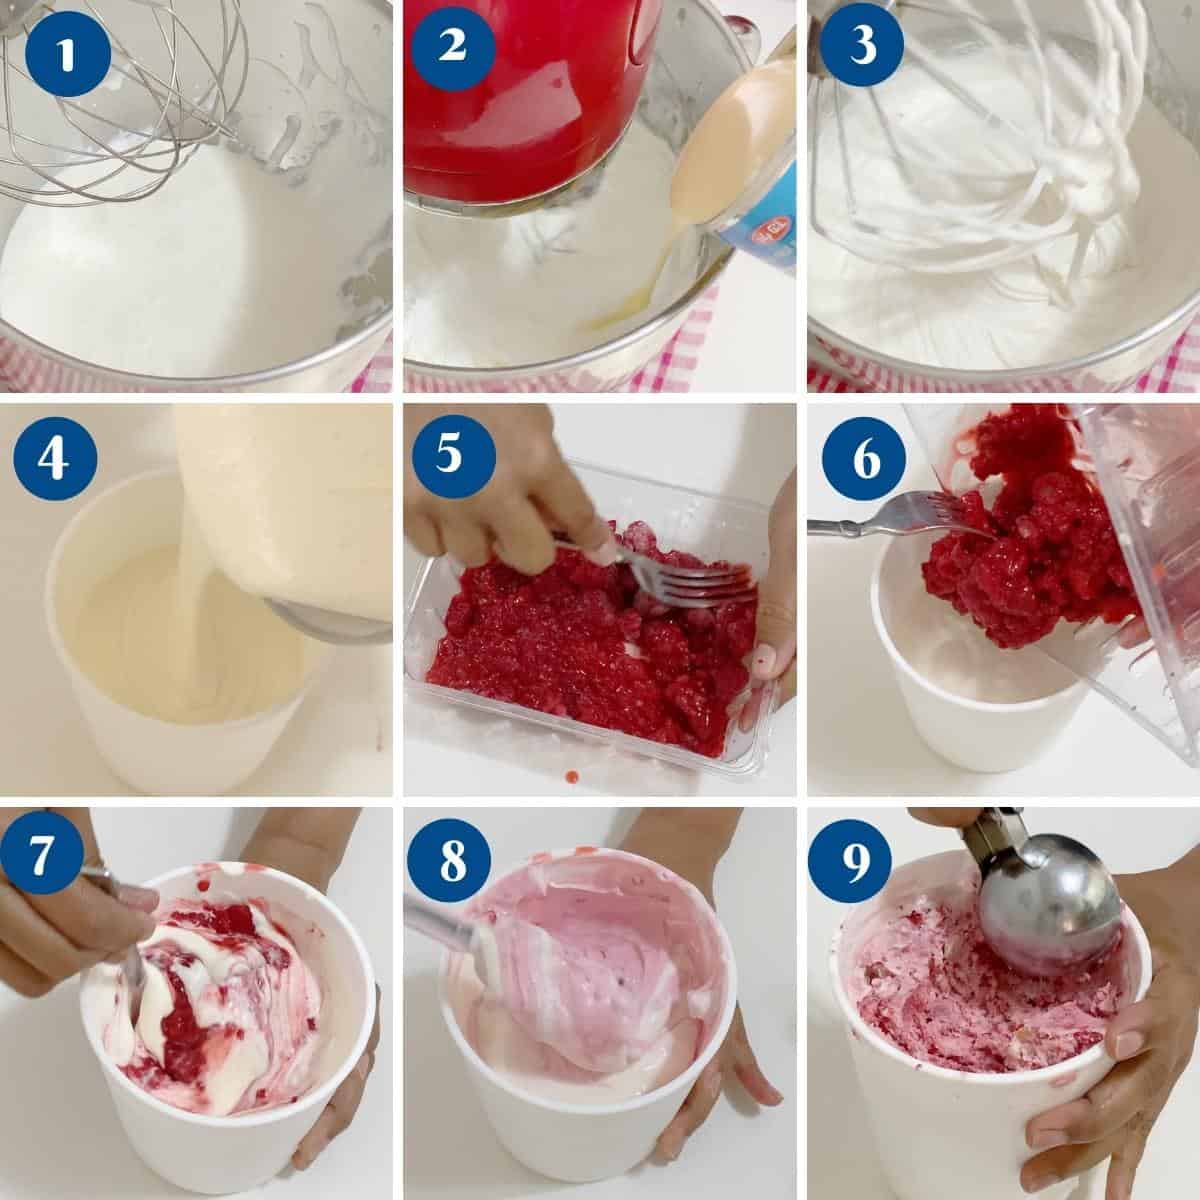 Progress pictures for making raspberry ice cream.